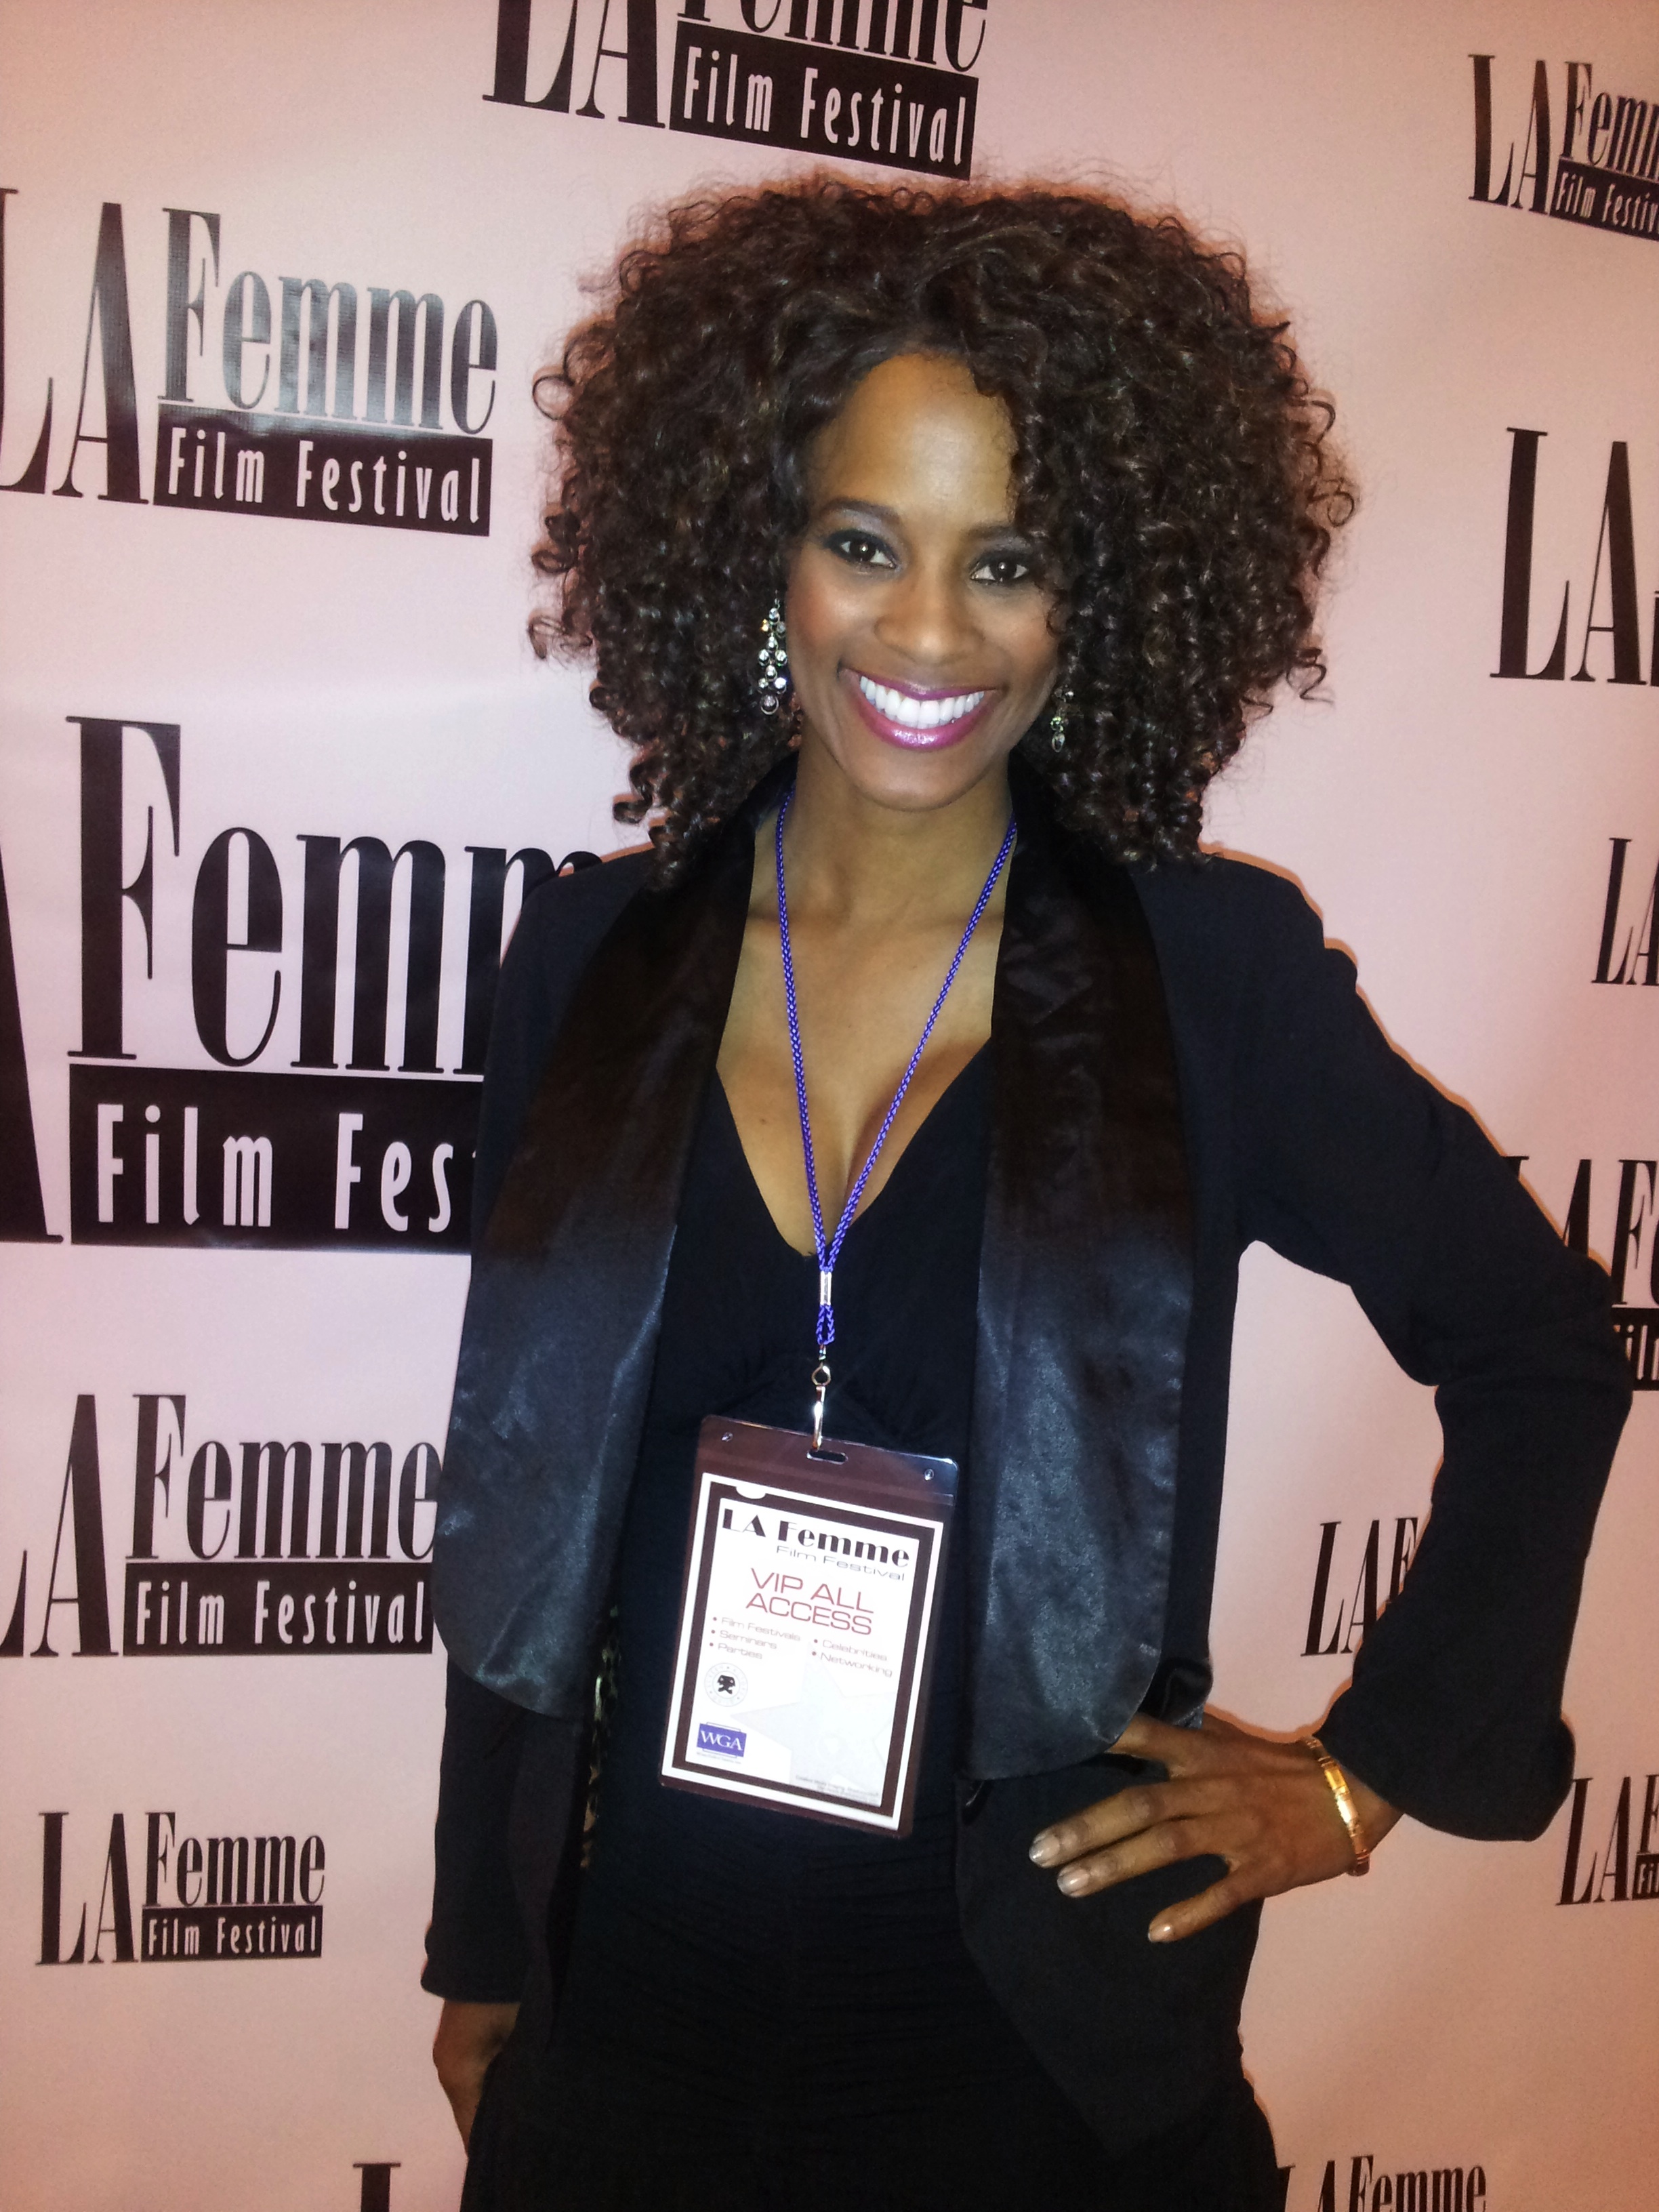 Actress Germany Kent arriving at the 2013 LA Femme Film Festival